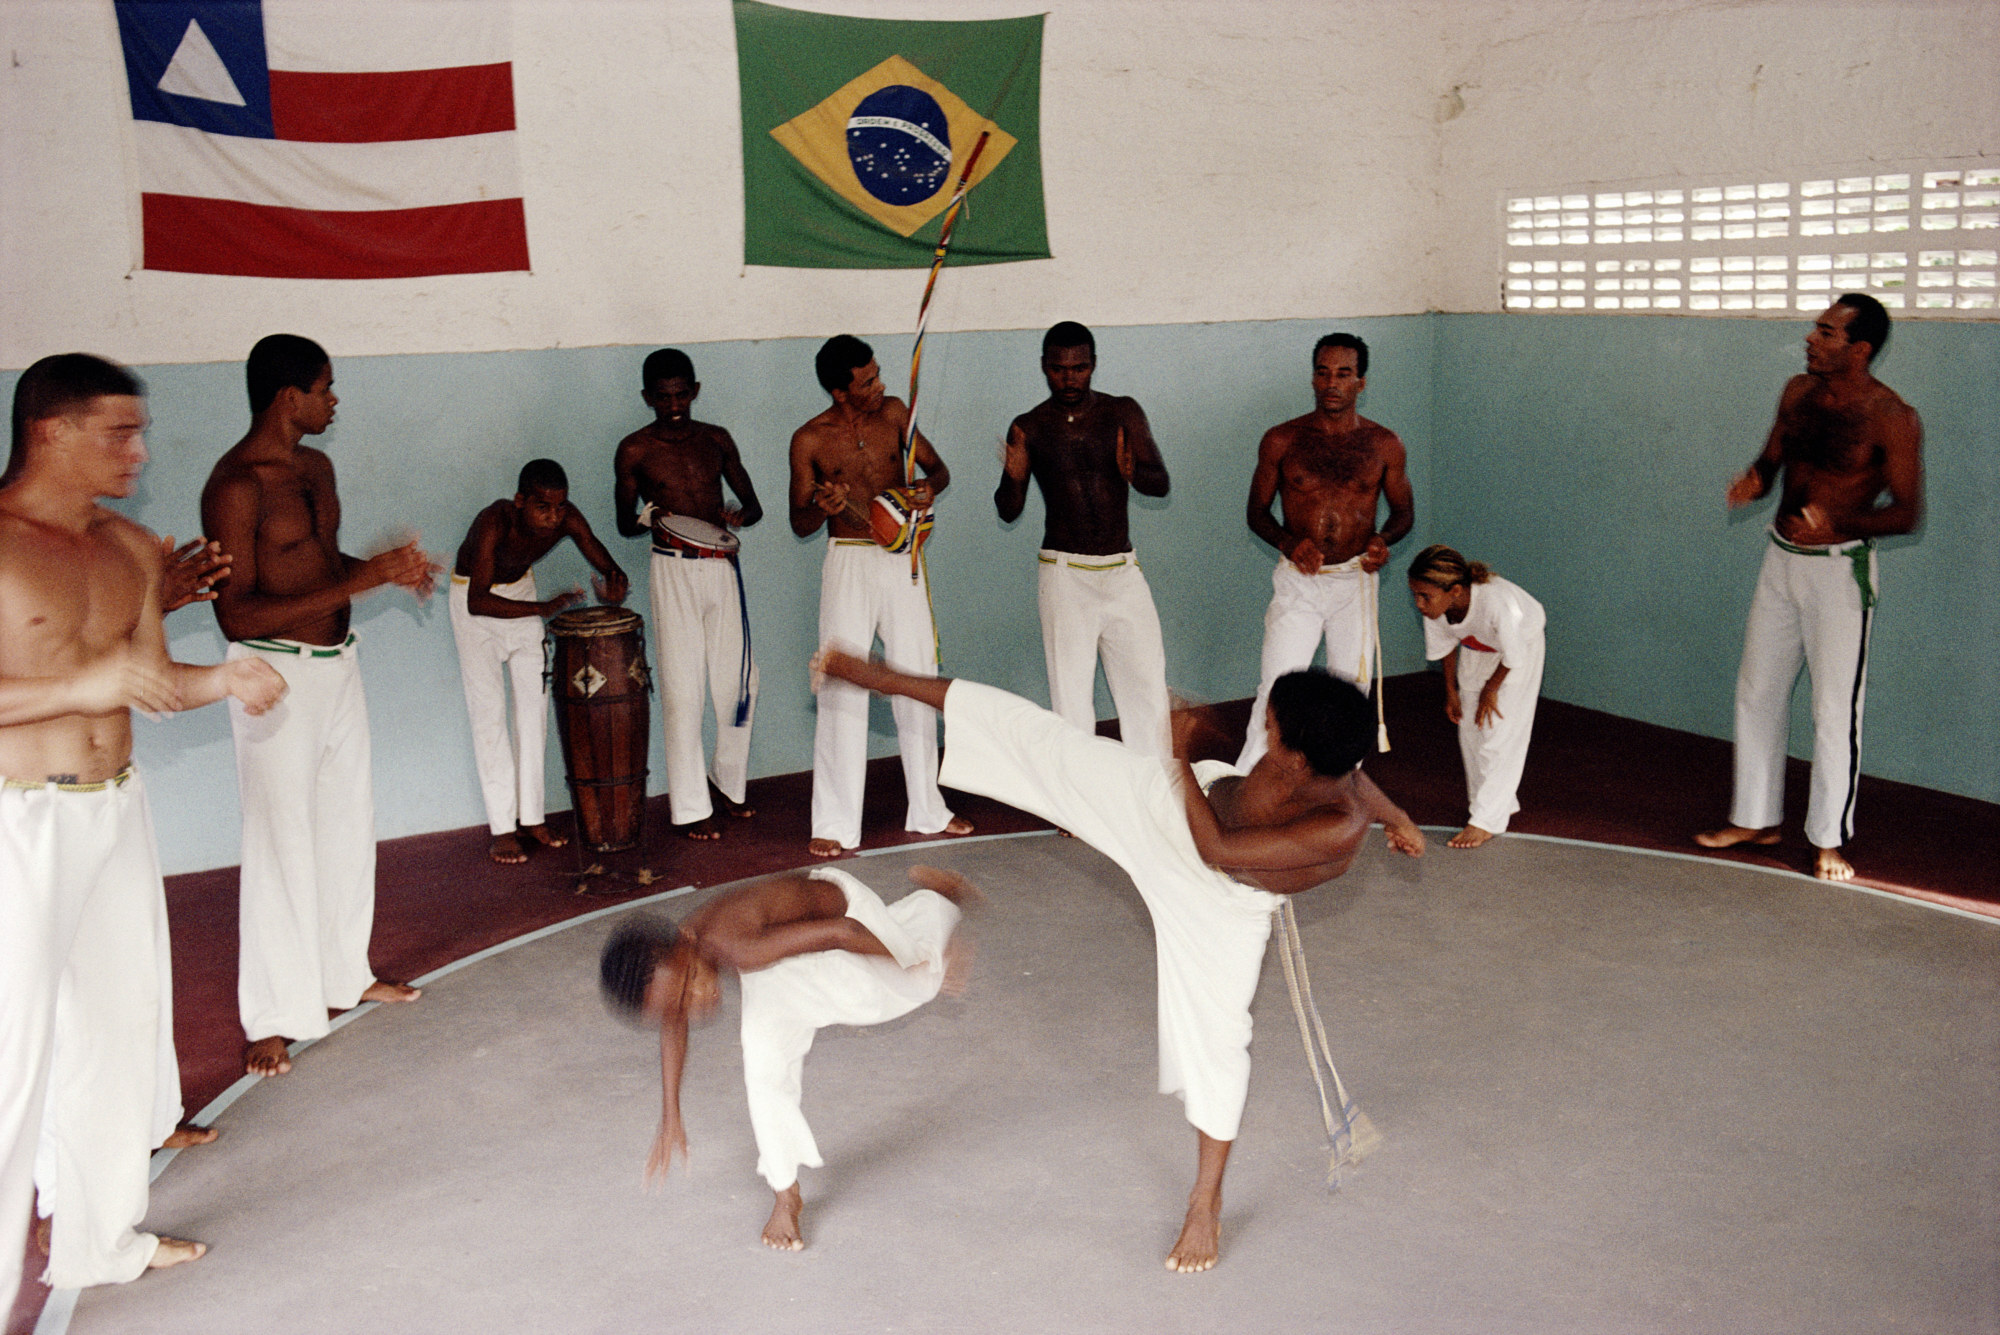 Brazilian capoeira master 'Eddy Murphy' on teaching China the